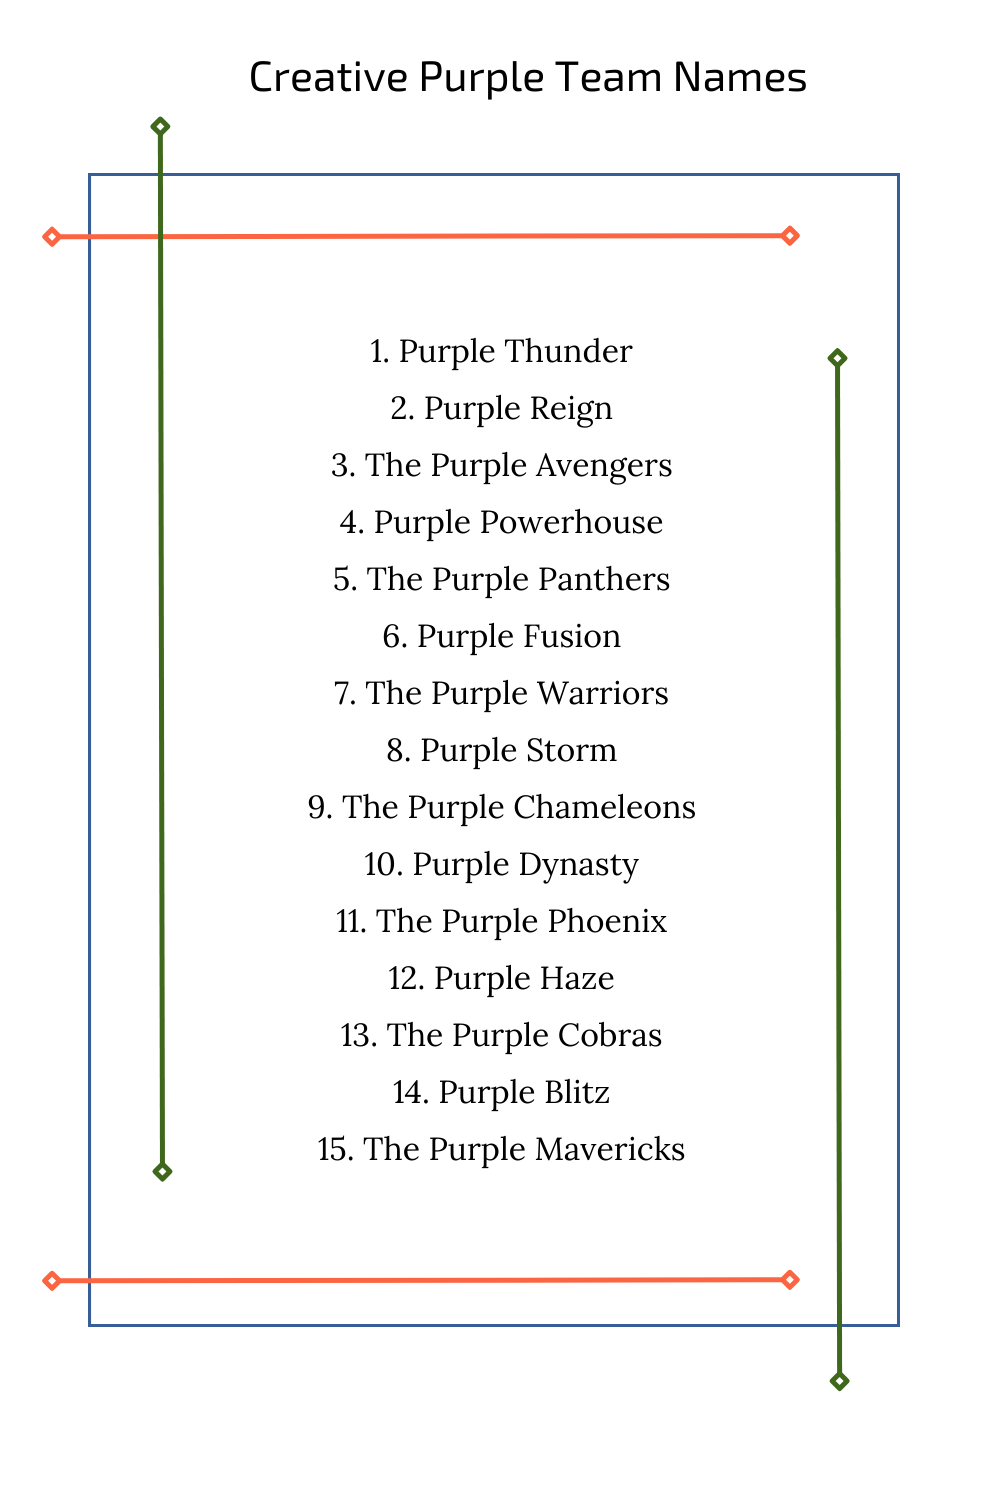 Creative Purple Team Names